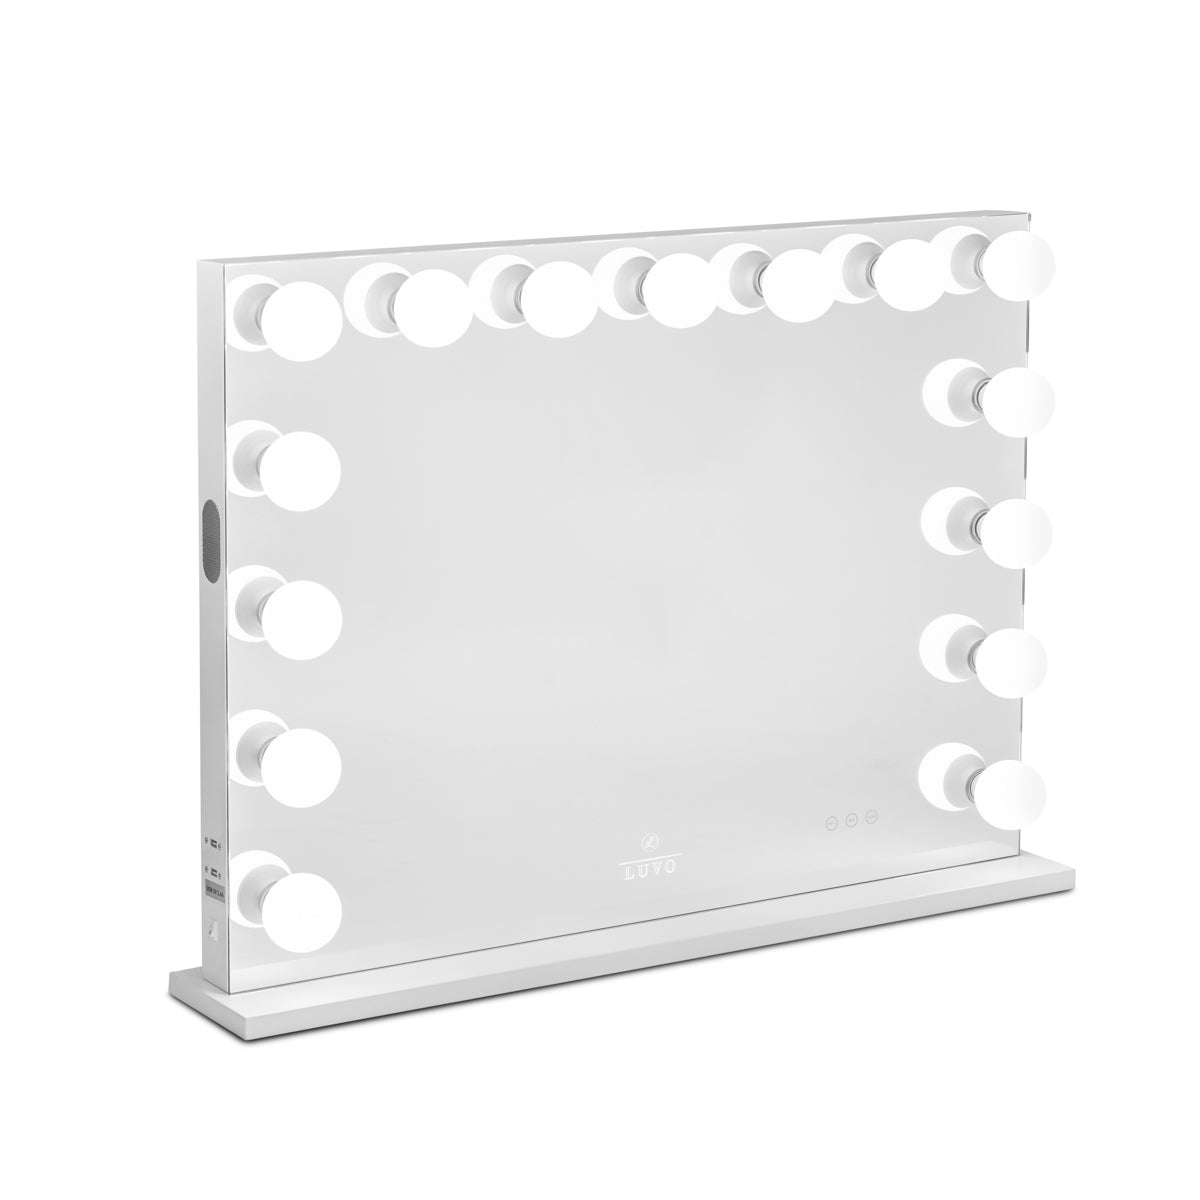 Arch Edge Vanity Mirror - Luvo Store